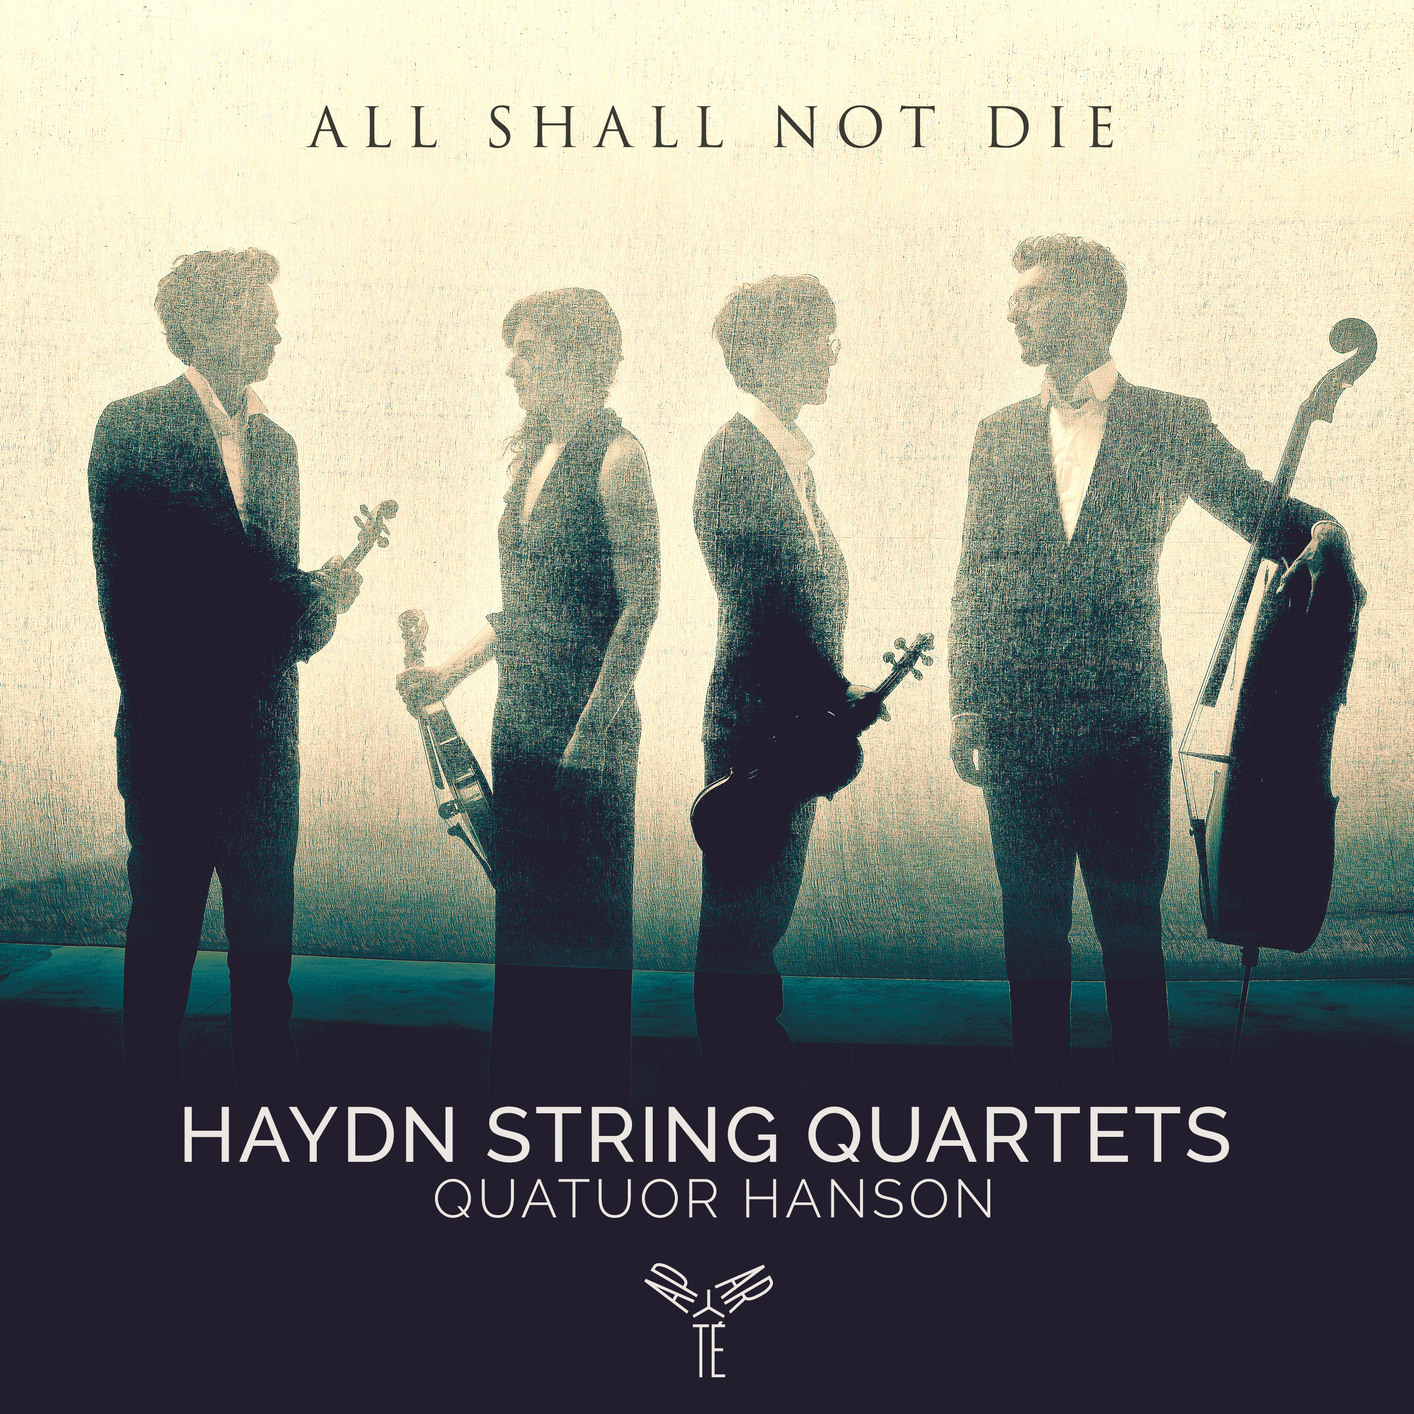 Quatuor Hanson - Haydn: String Quartets “All shall not die” (2019) [FLAC 24bit/96kHz]